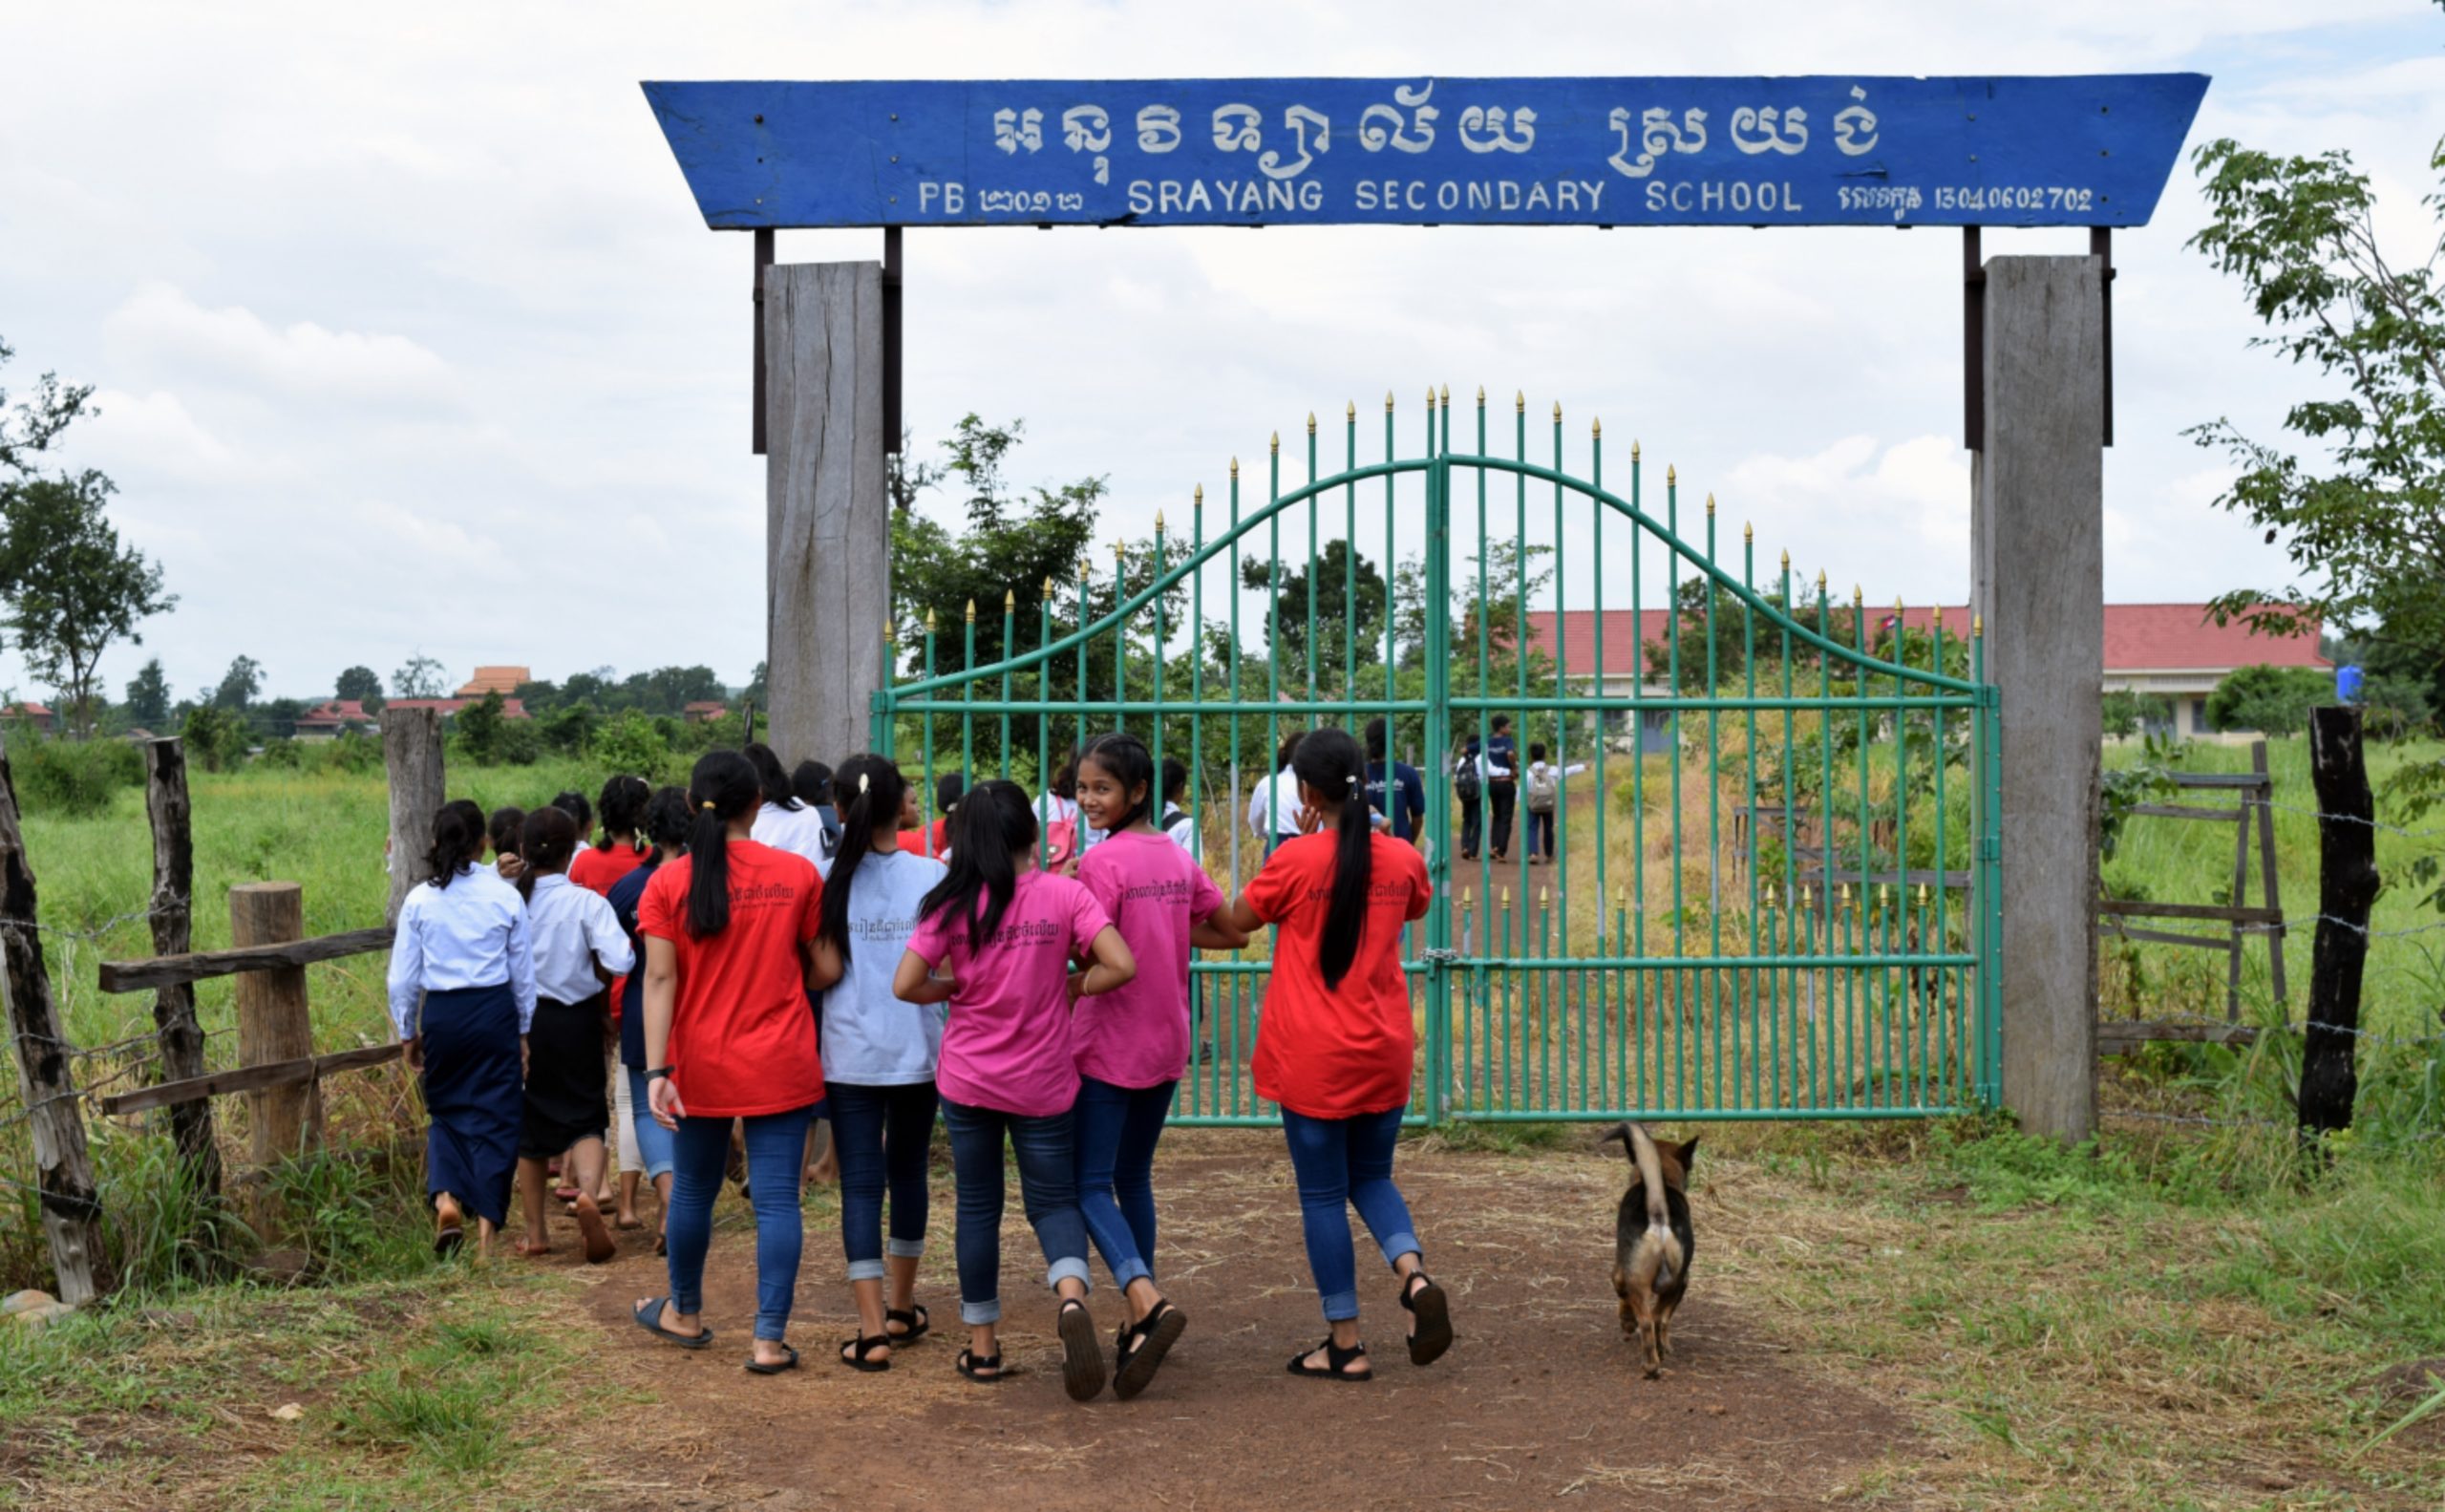 Students walking to Srayang Secondary School